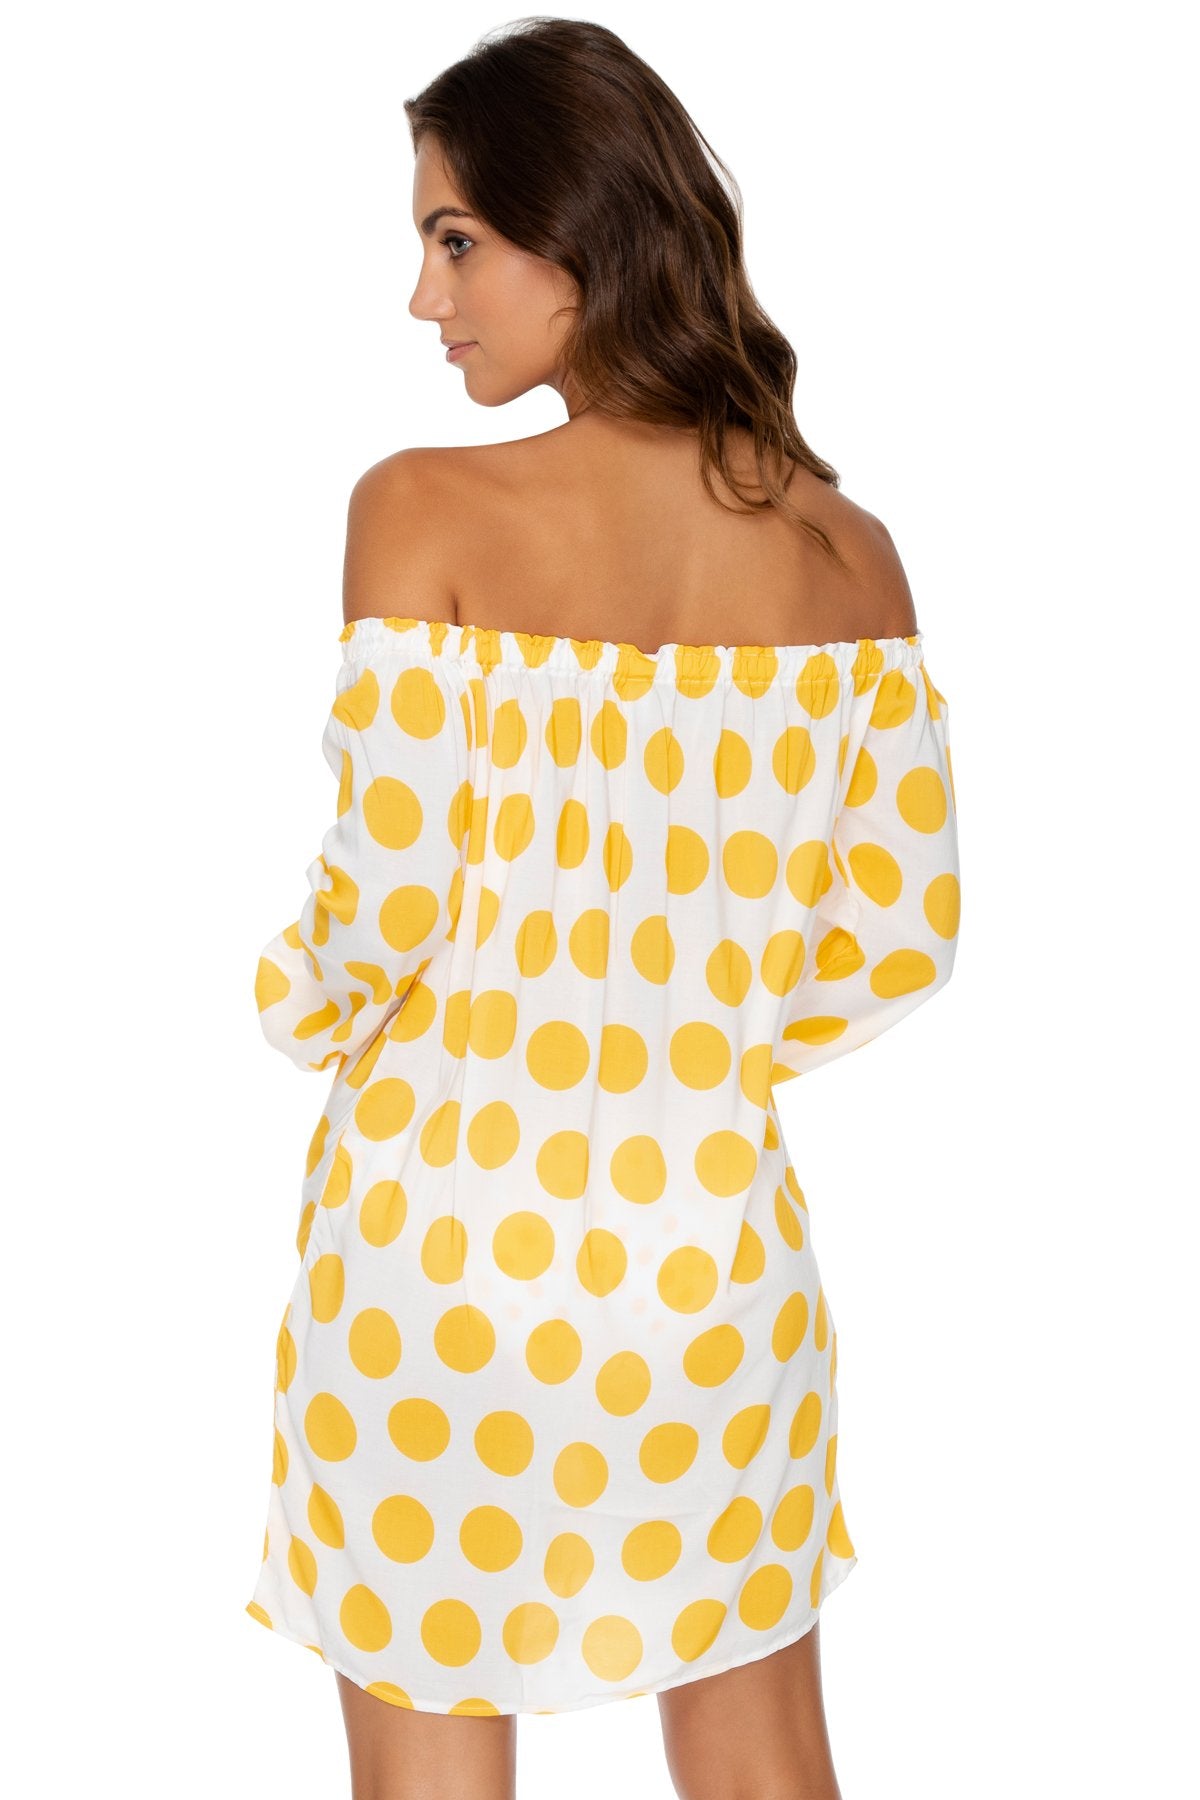 Itsy Bitsy Bubble Sleeve Yellow Polka Dot Cover Up Dress – Luli Fama